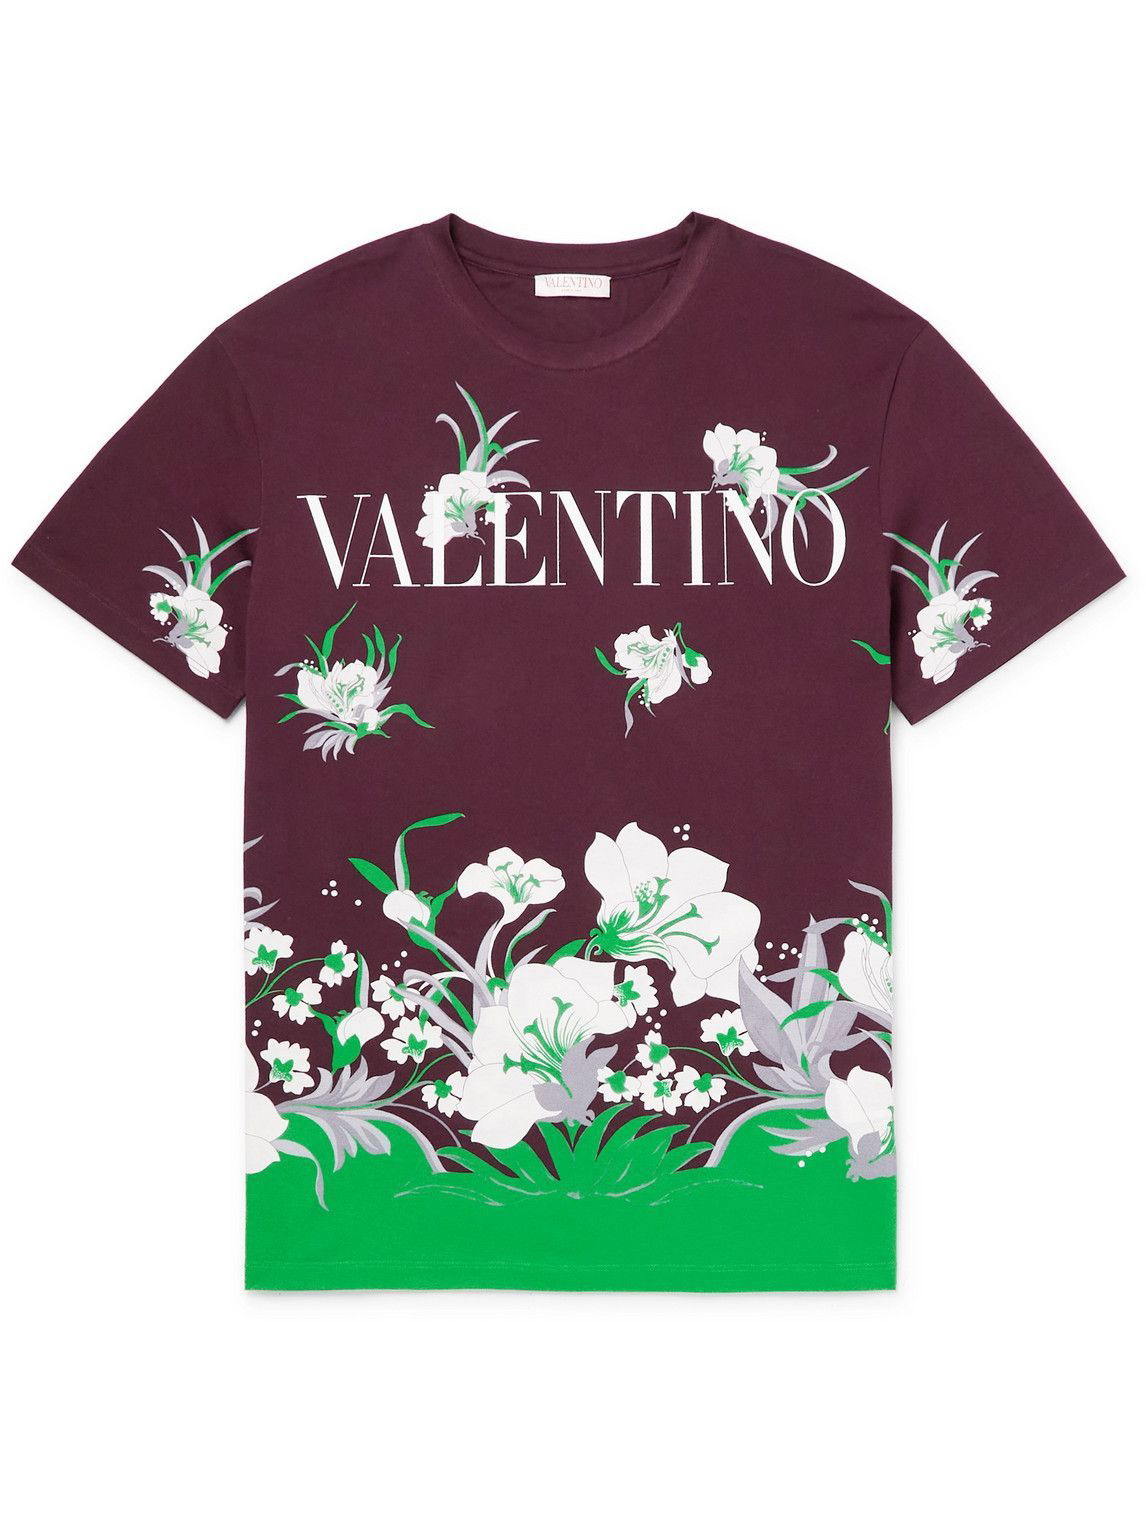 Valentino - Printed Cotton-Jersey T-Shirt Brown